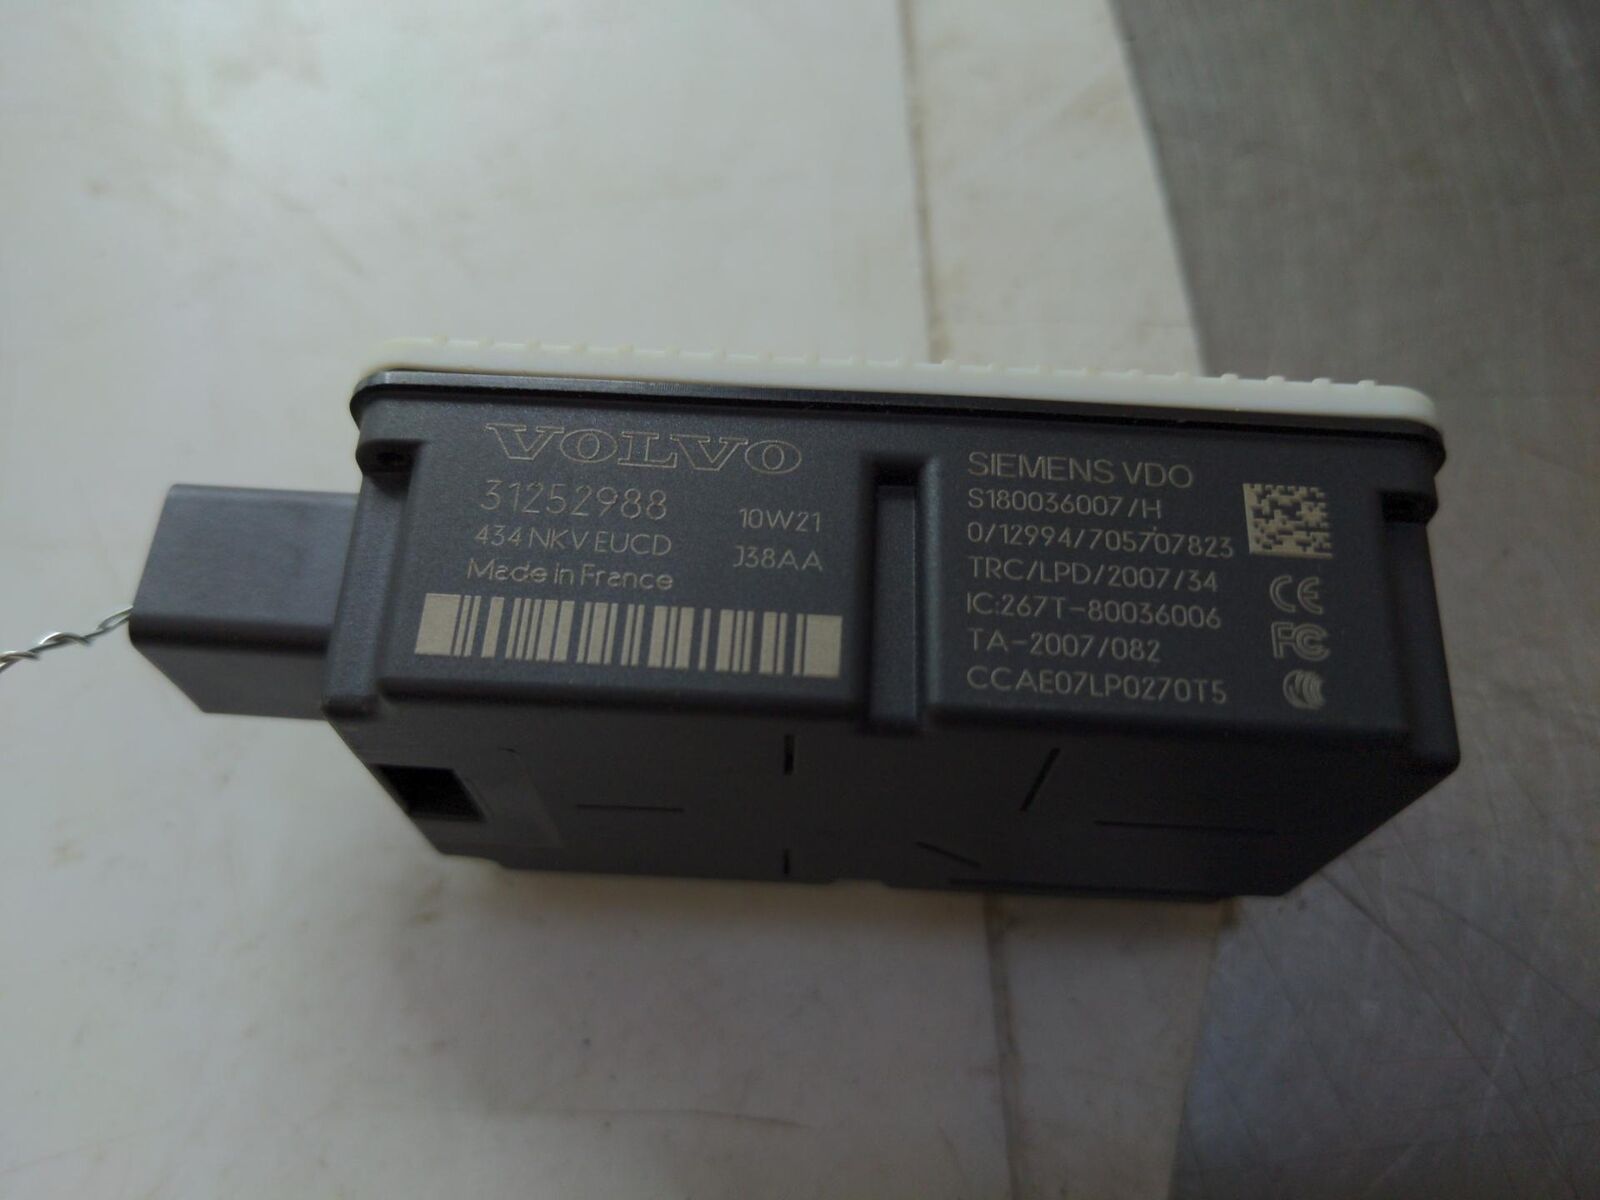 2011 VOLVO xc70 SERIES 31252988 Central Lock Remote Receiver module